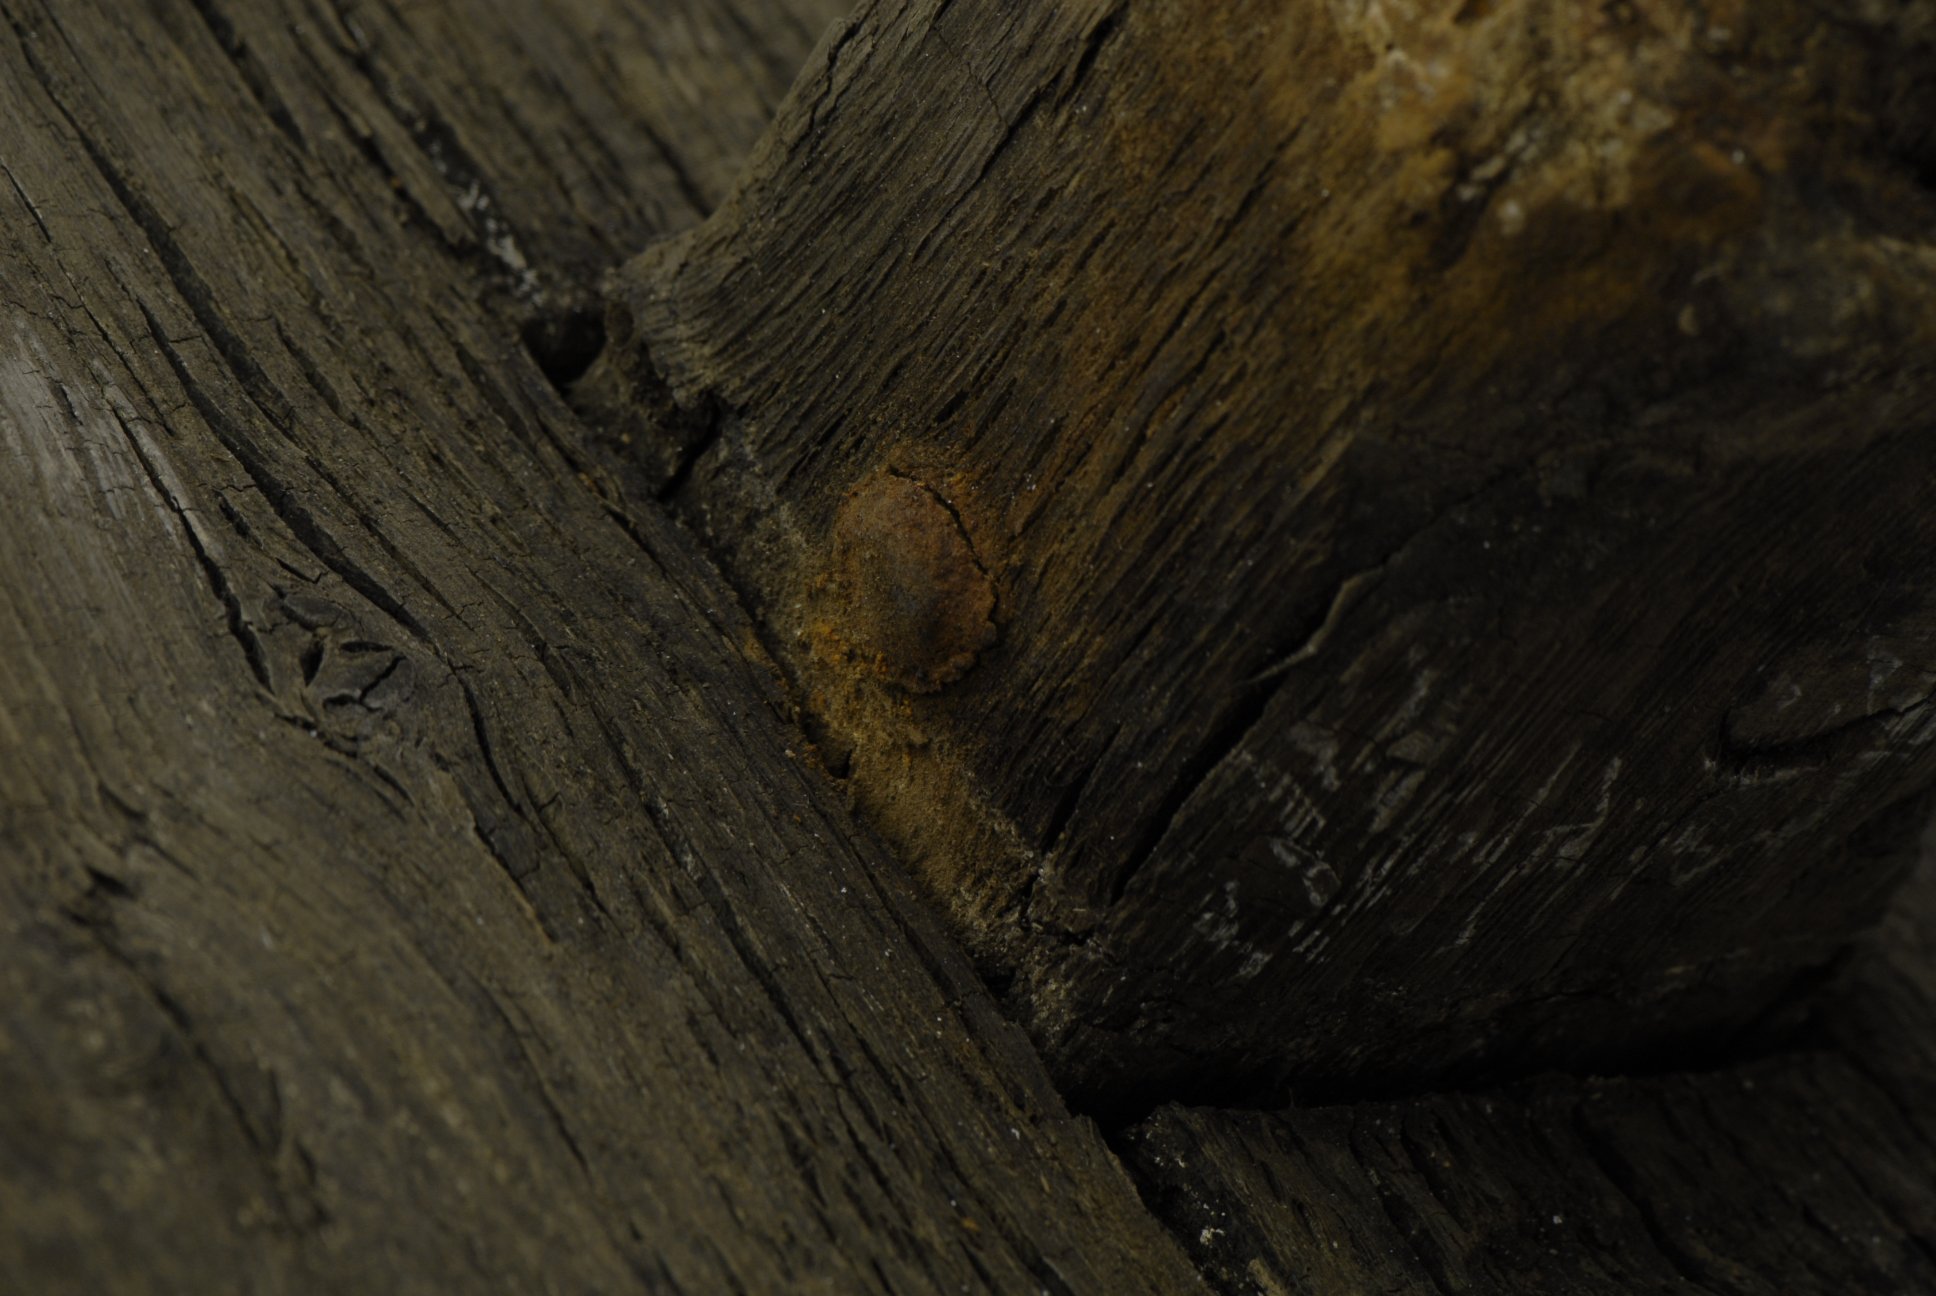 Detail showing wooden dowel